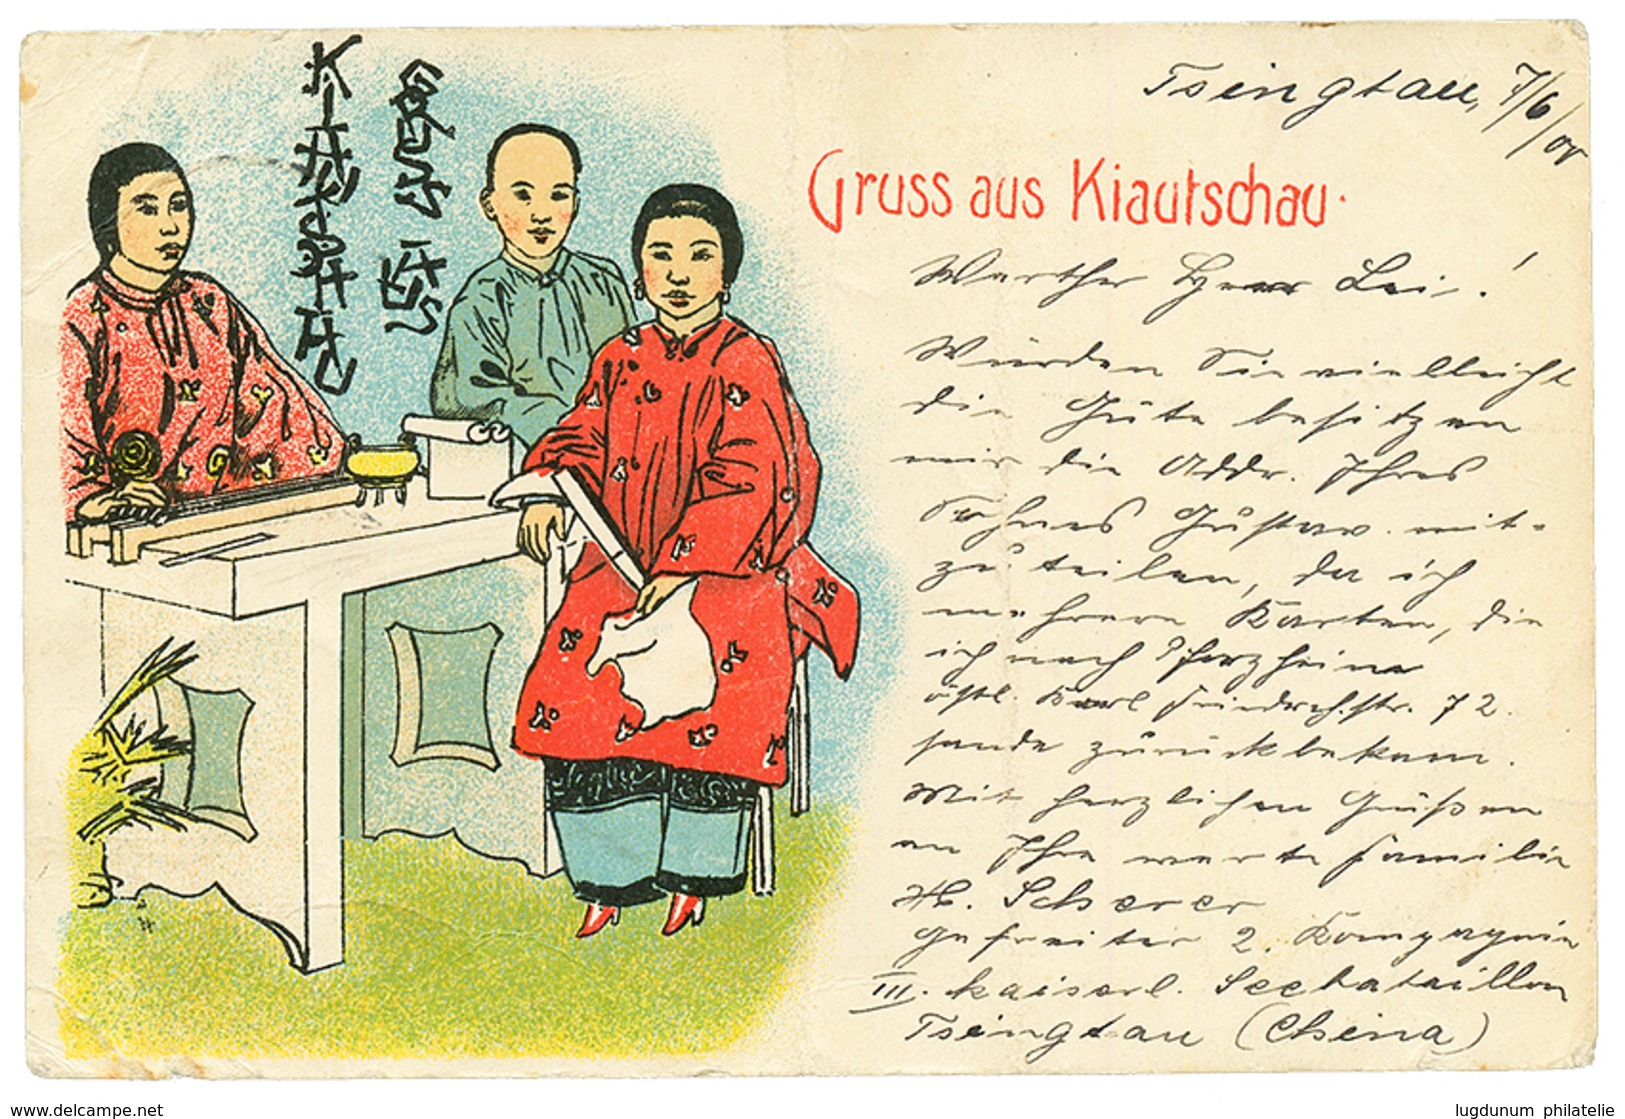 1900 5pf On 10pf (n°1 IIb) Canc. TSINGTAU On Card (crease) "GRUSS AUS KIAUTSCHAU" In Color. Vf. - Kiautchou